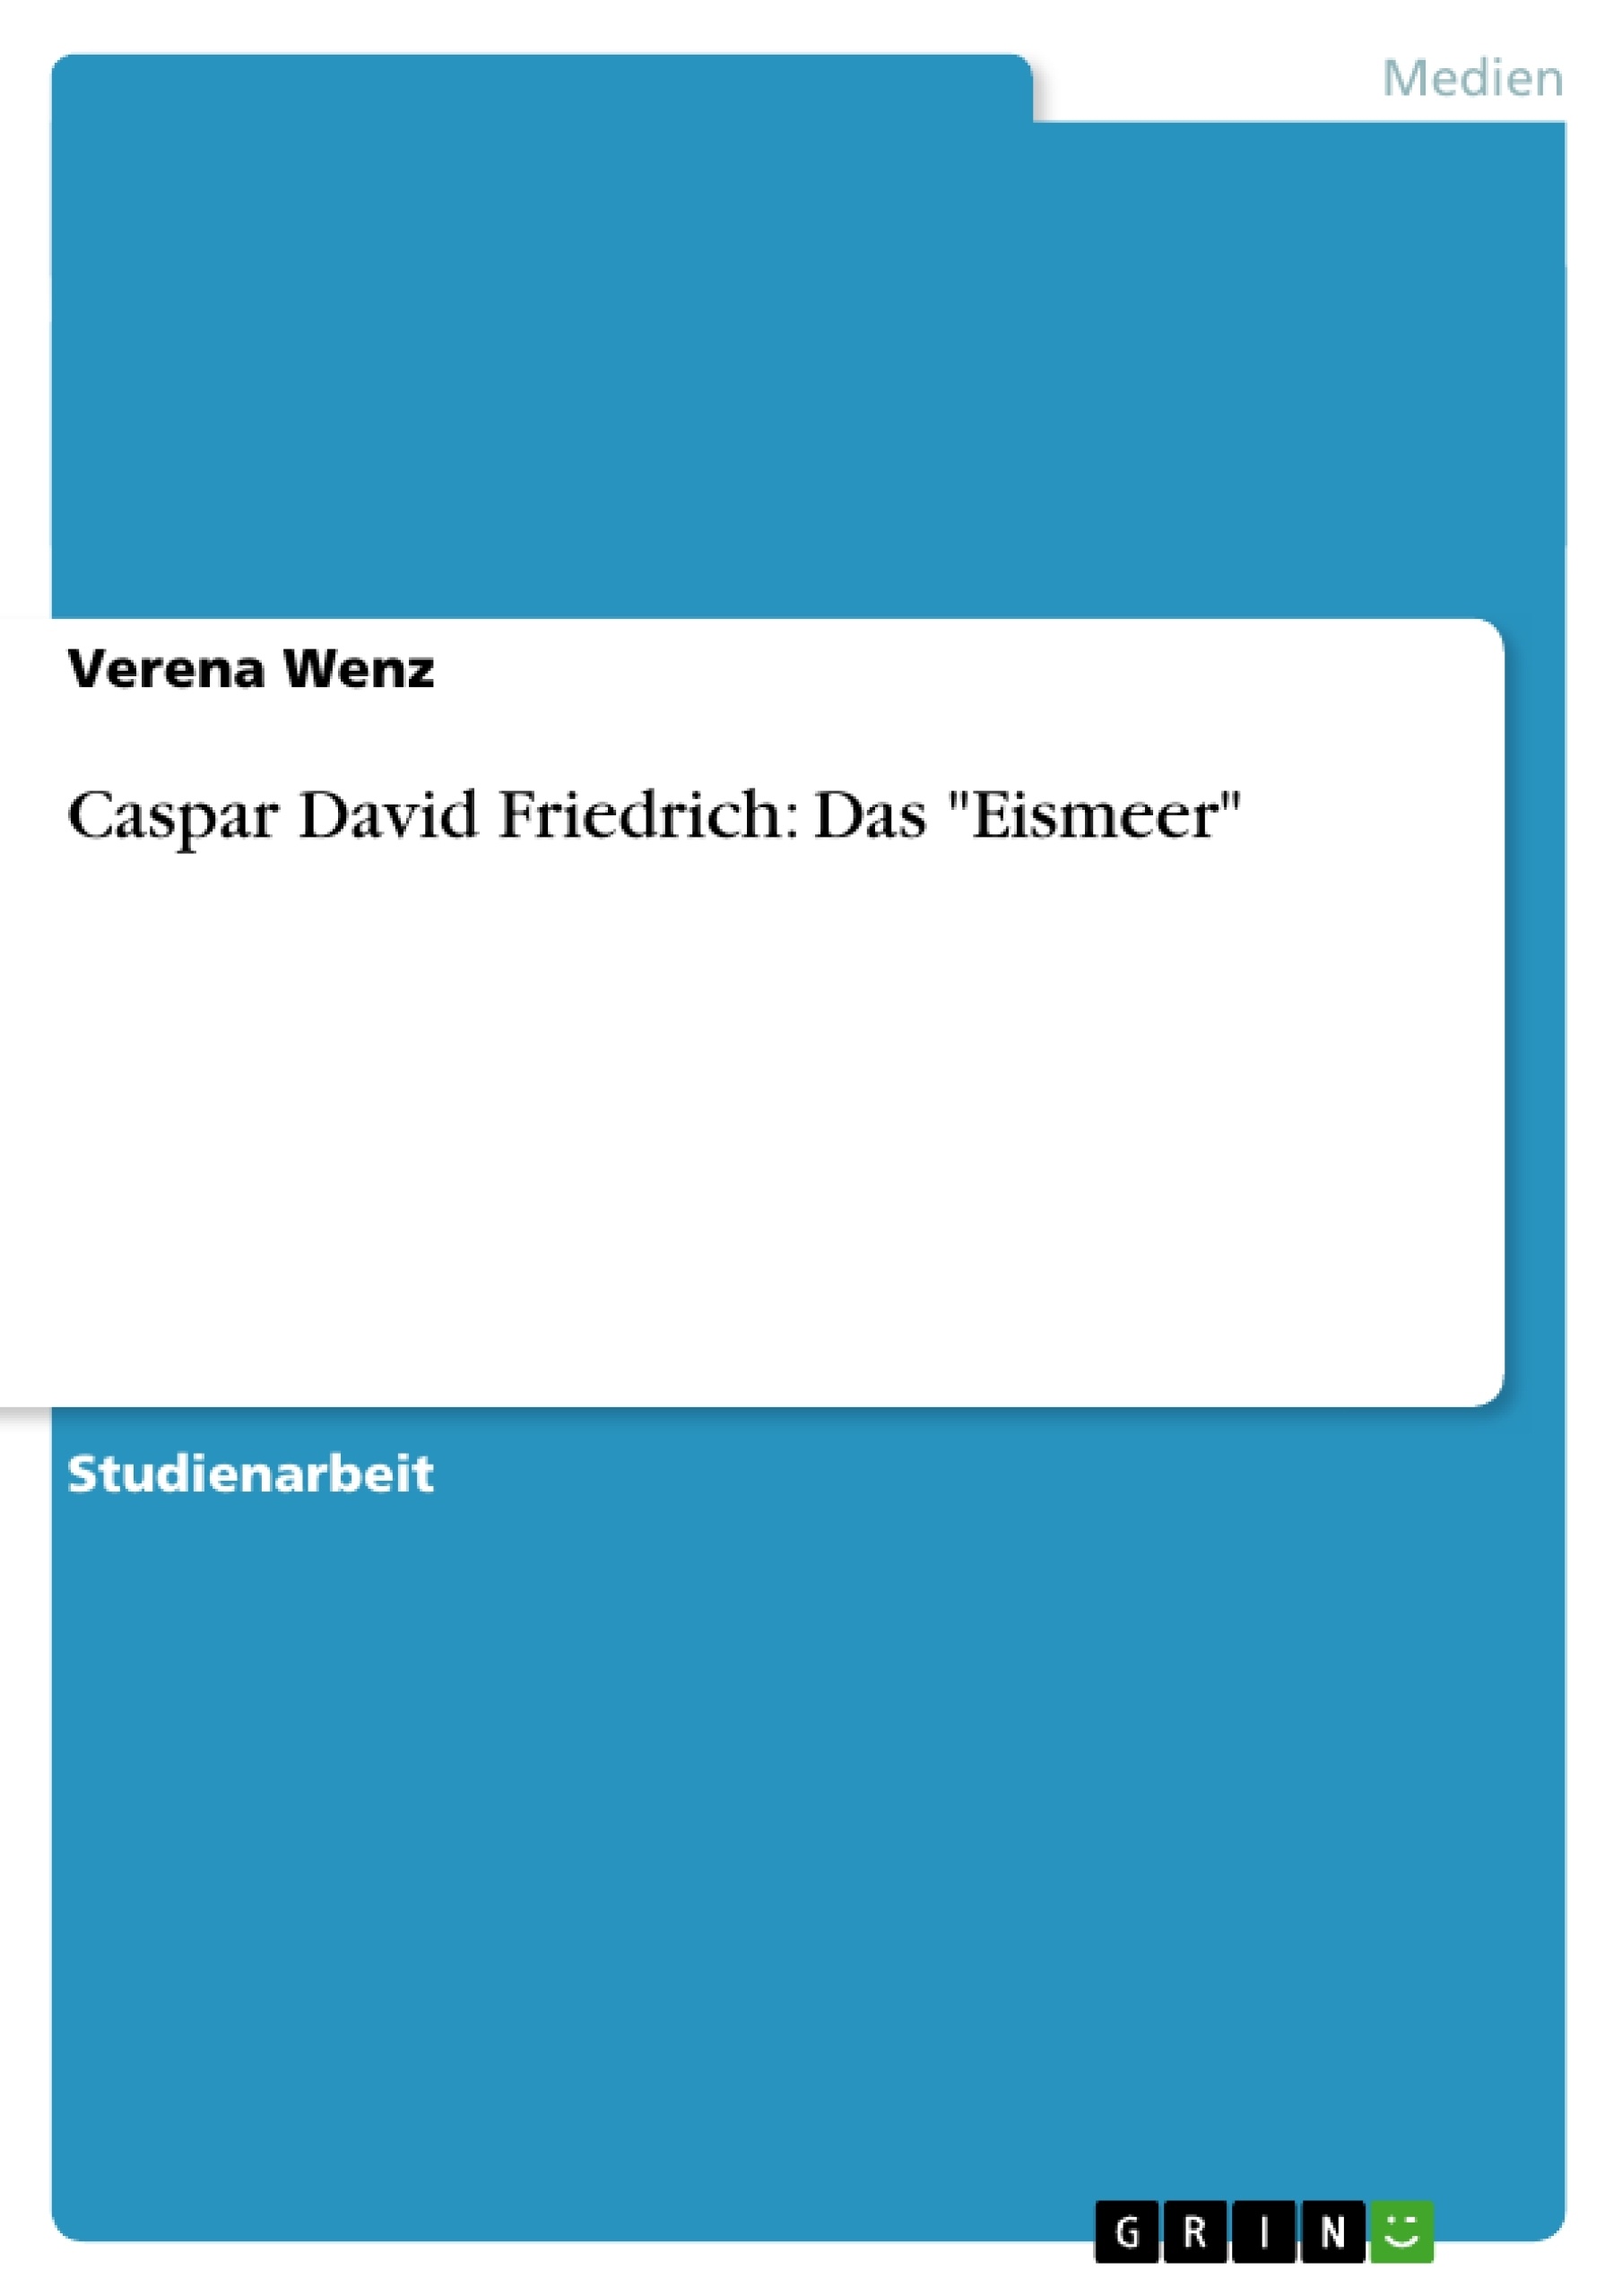 Título: Caspar David Friedrich: Das "Eismeer"